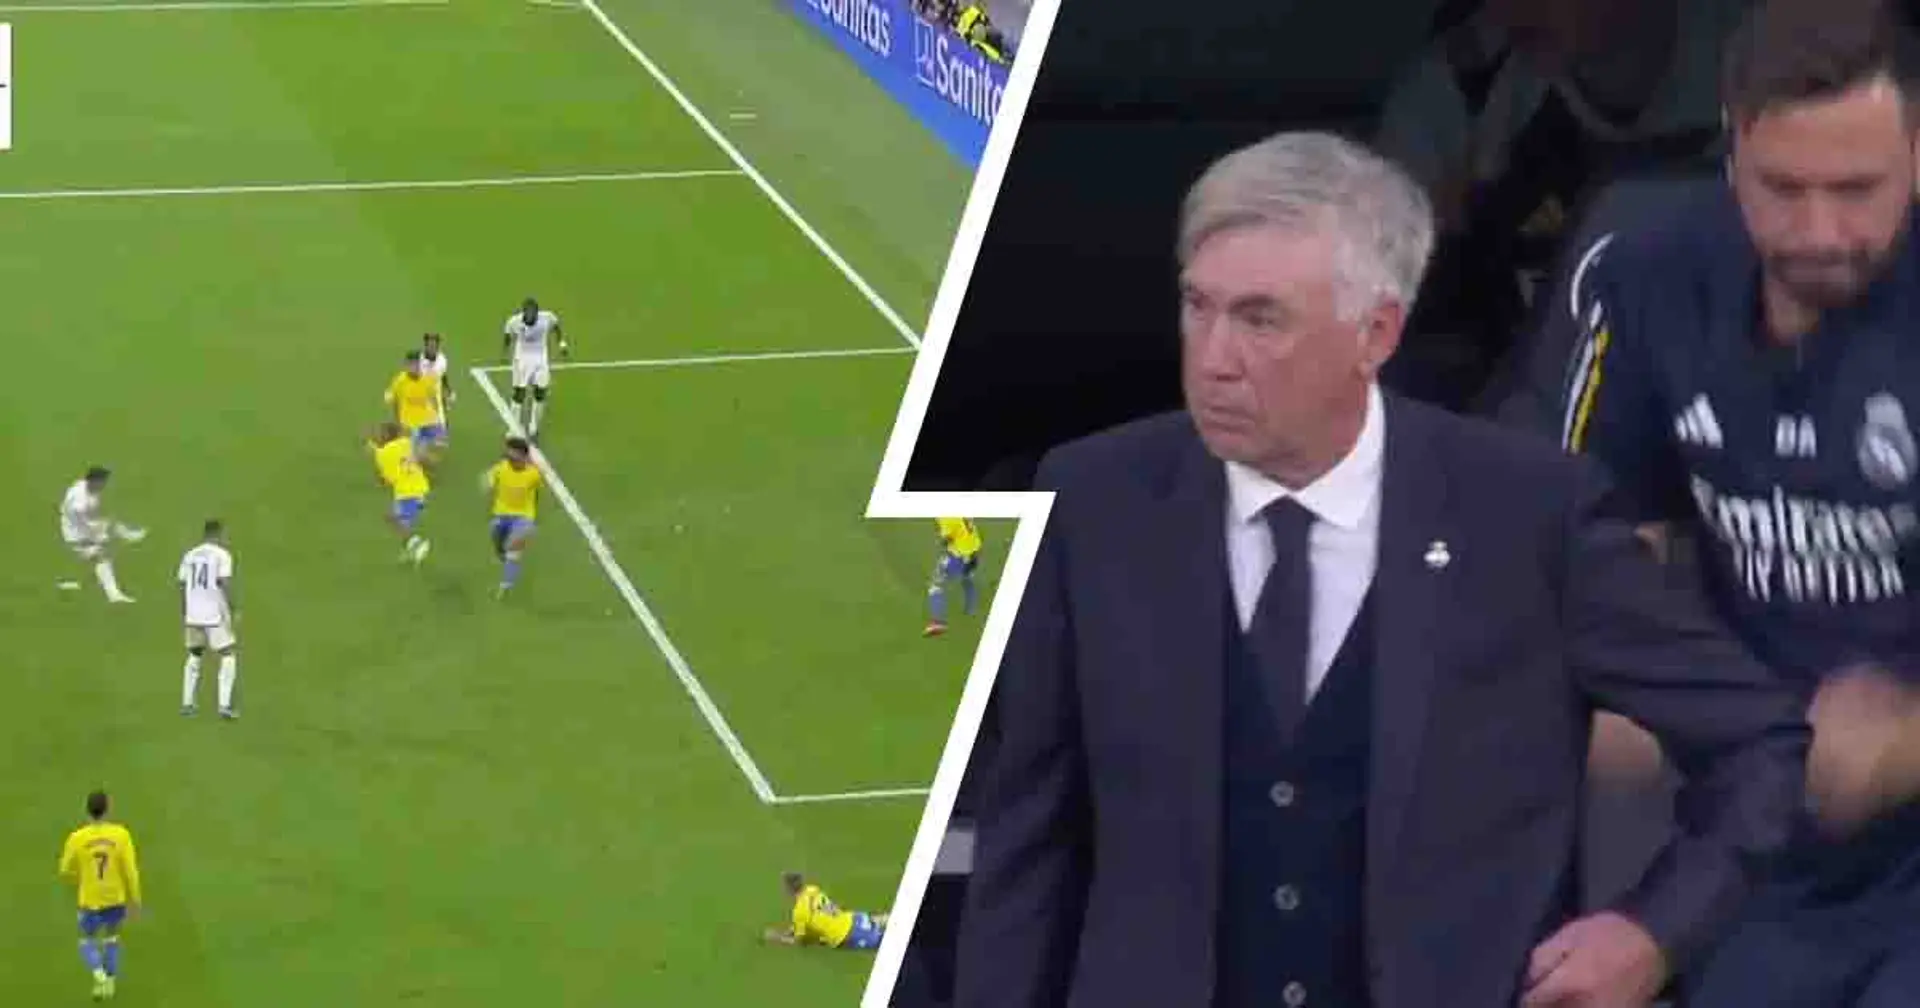 Spotted: Carlo Ancelotti’s restrained celebration to Diaz's goal vs Las Palmas